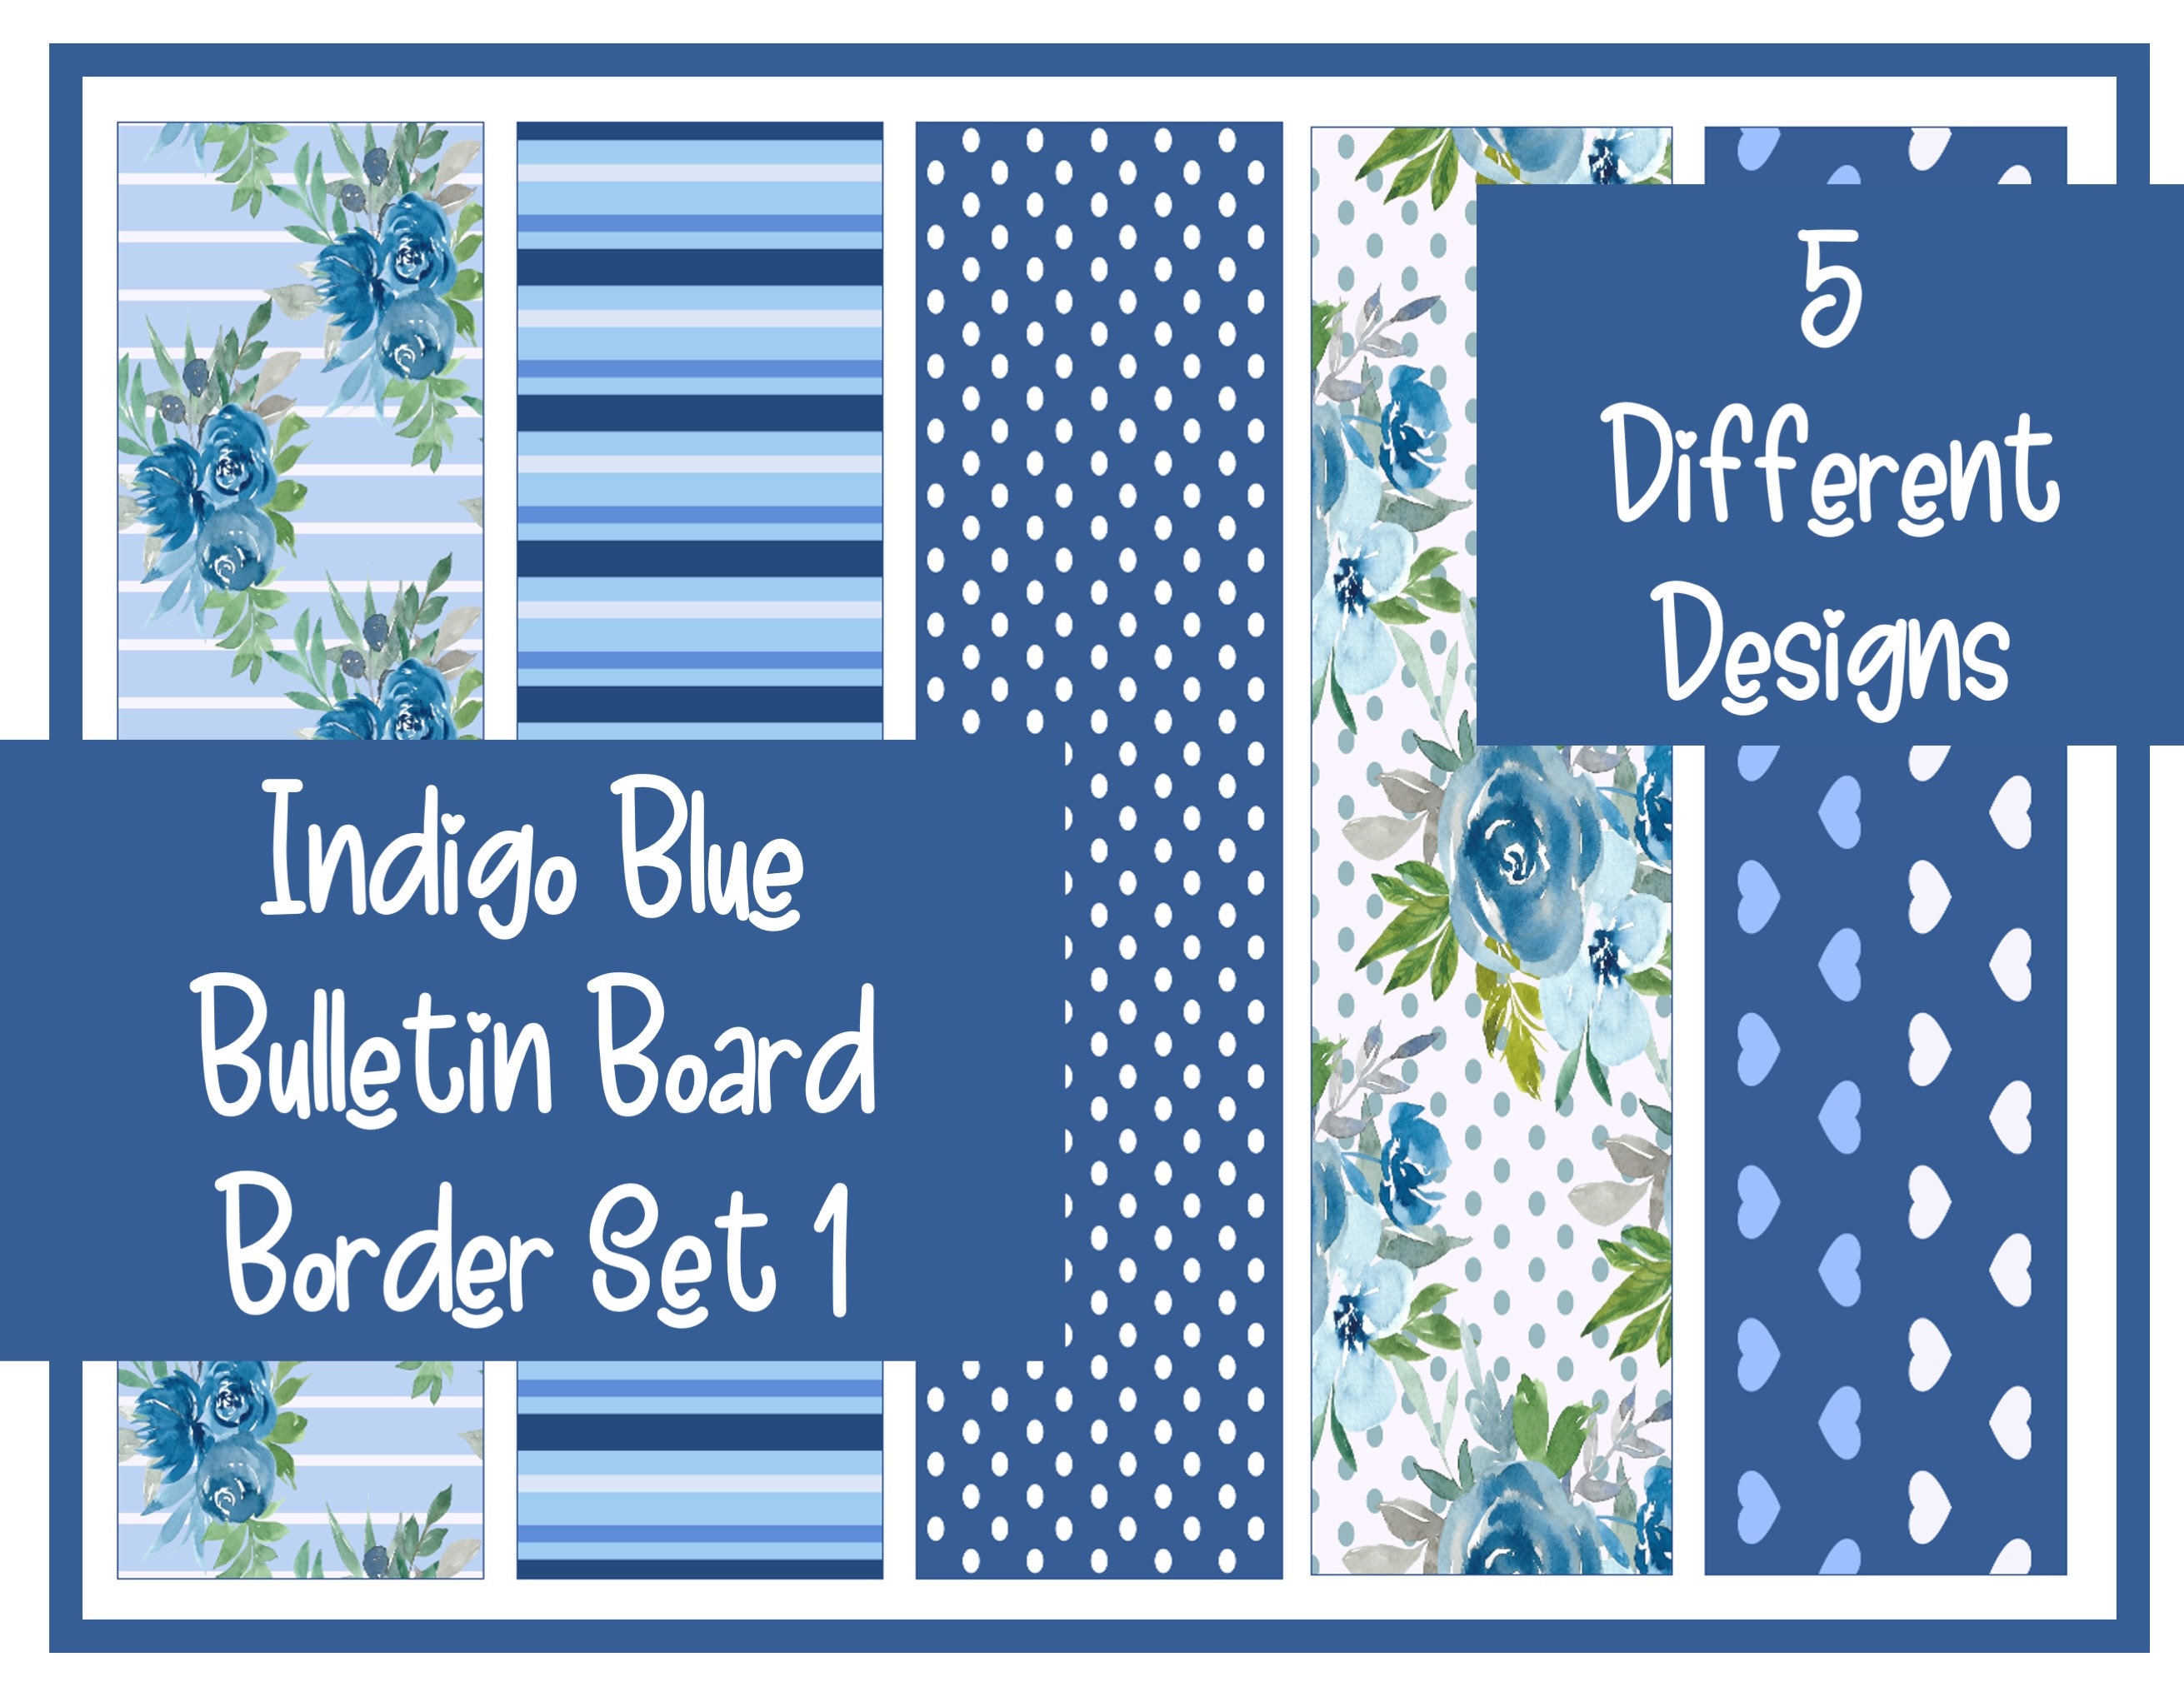 Indigo Blue Bulletin Board Border 5 Printable Designs set 1 